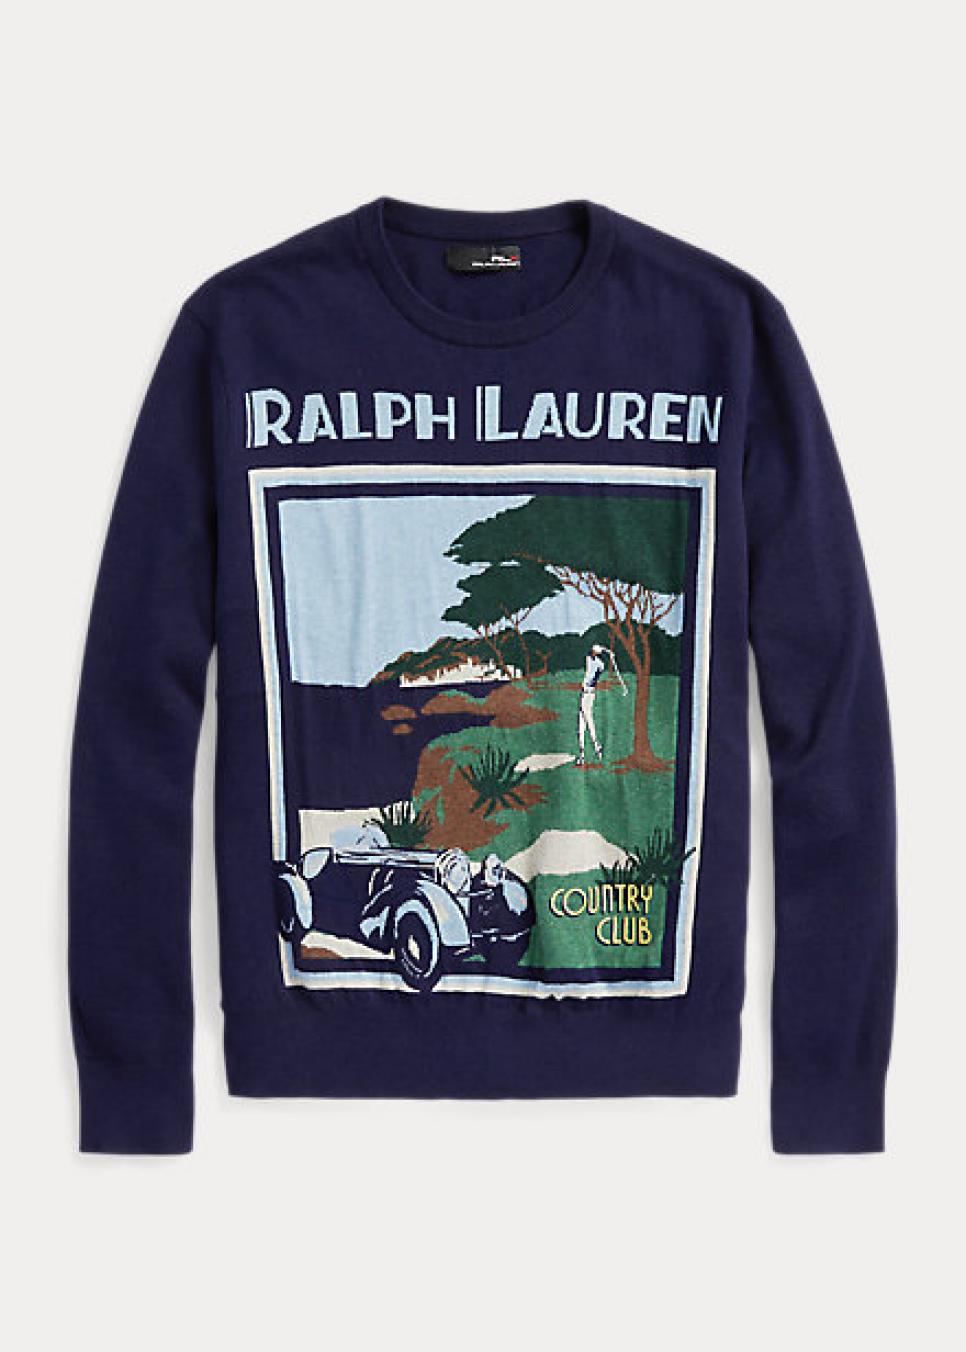 Ralph Lauren Country Club Sweater